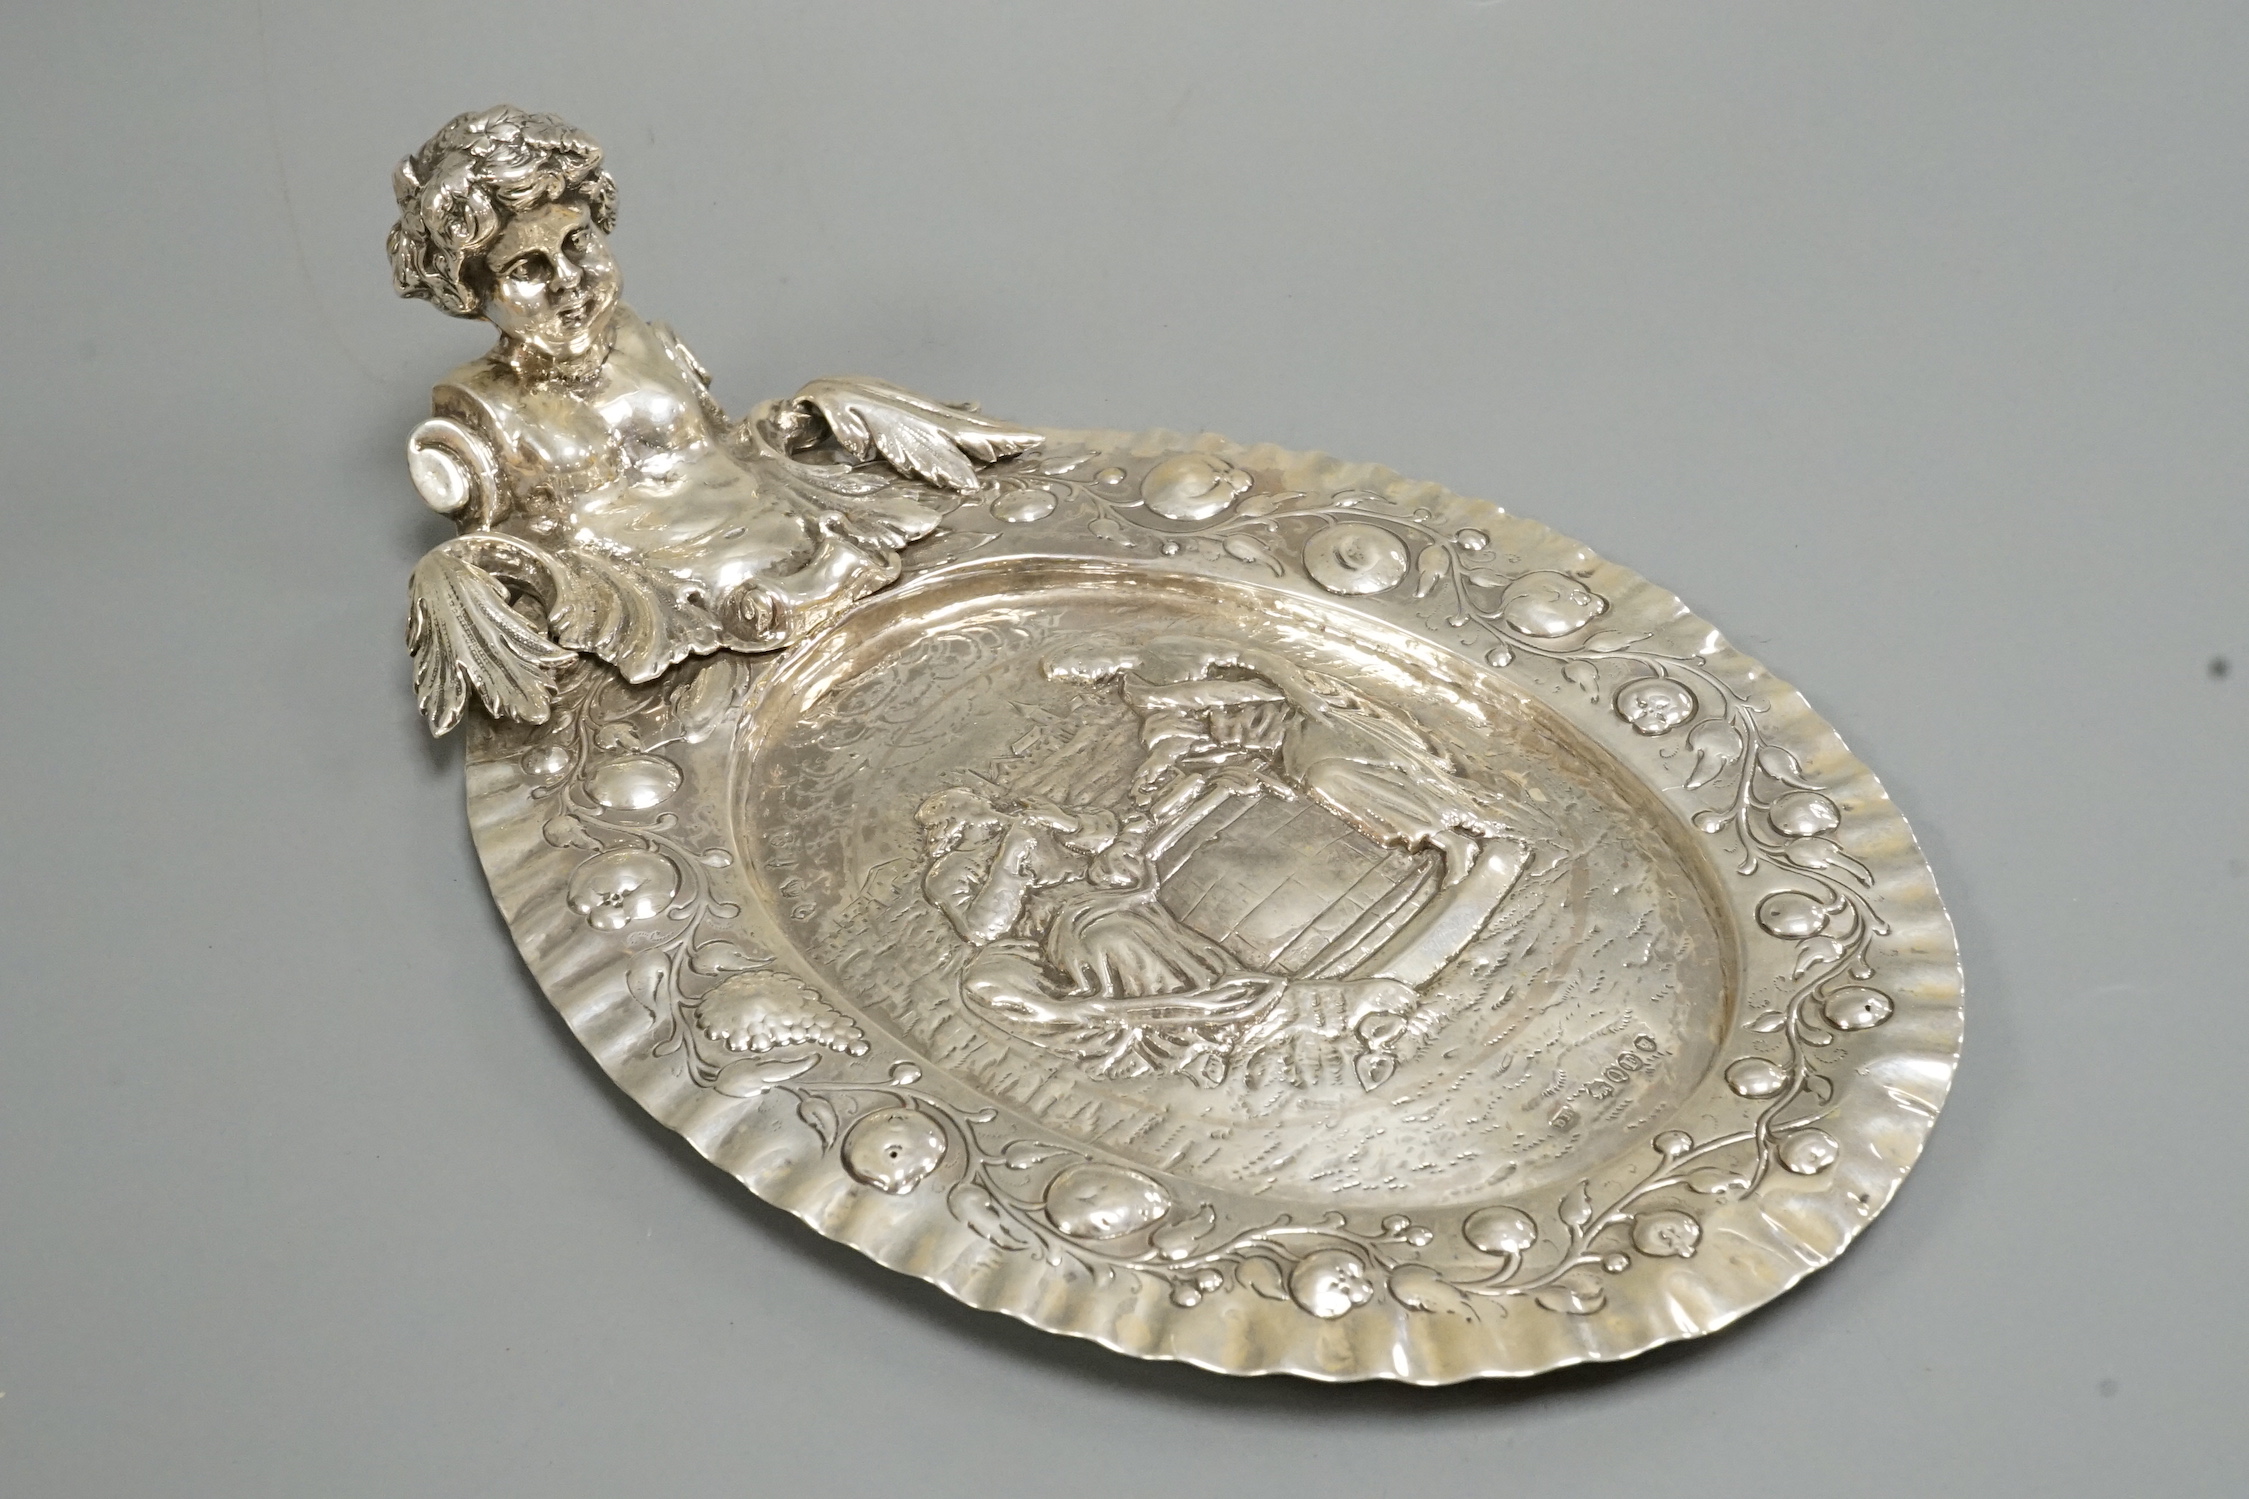 A late 19th century Hanau silver oval dish, with figural handle, import marks for David Bridge, London, 1891, 27cm, 12.4oz.